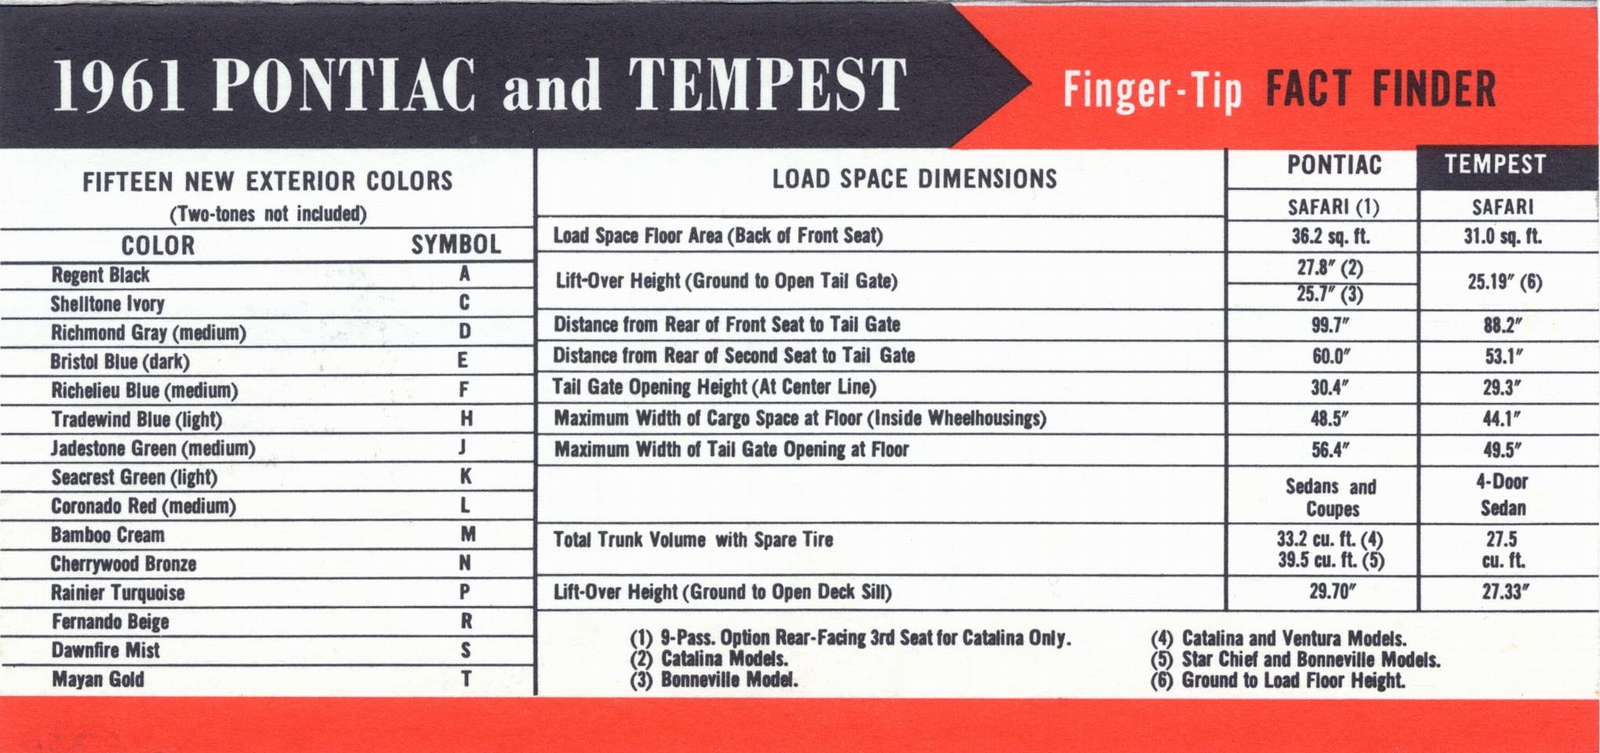 n_1961 Pontiac Fingertip Fact Finder-01.jpg